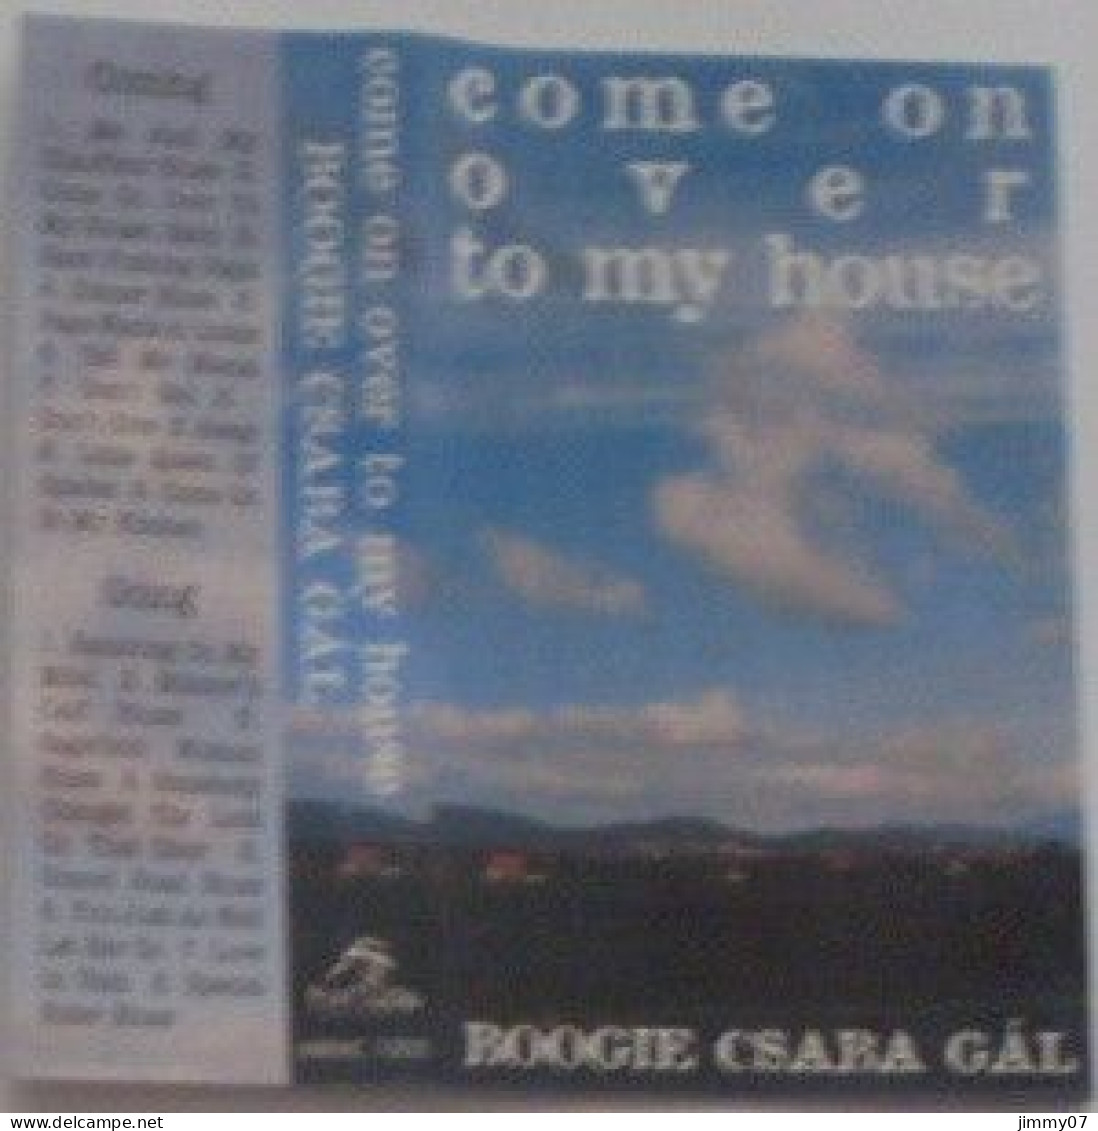 "Boogie" Csaba Gál - Come On Over To My House (Cass, Album) - Cassettes Audio